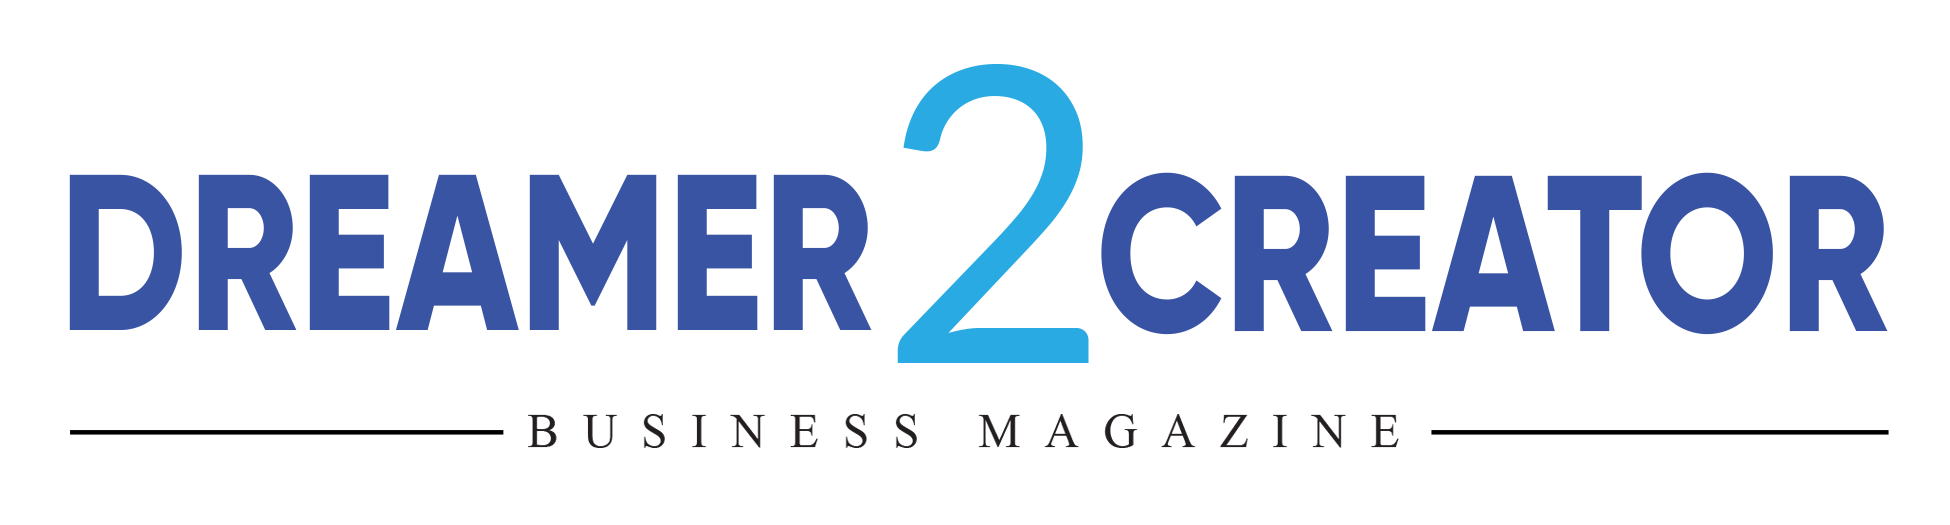 Dreamer 2 Creator Business Magazine